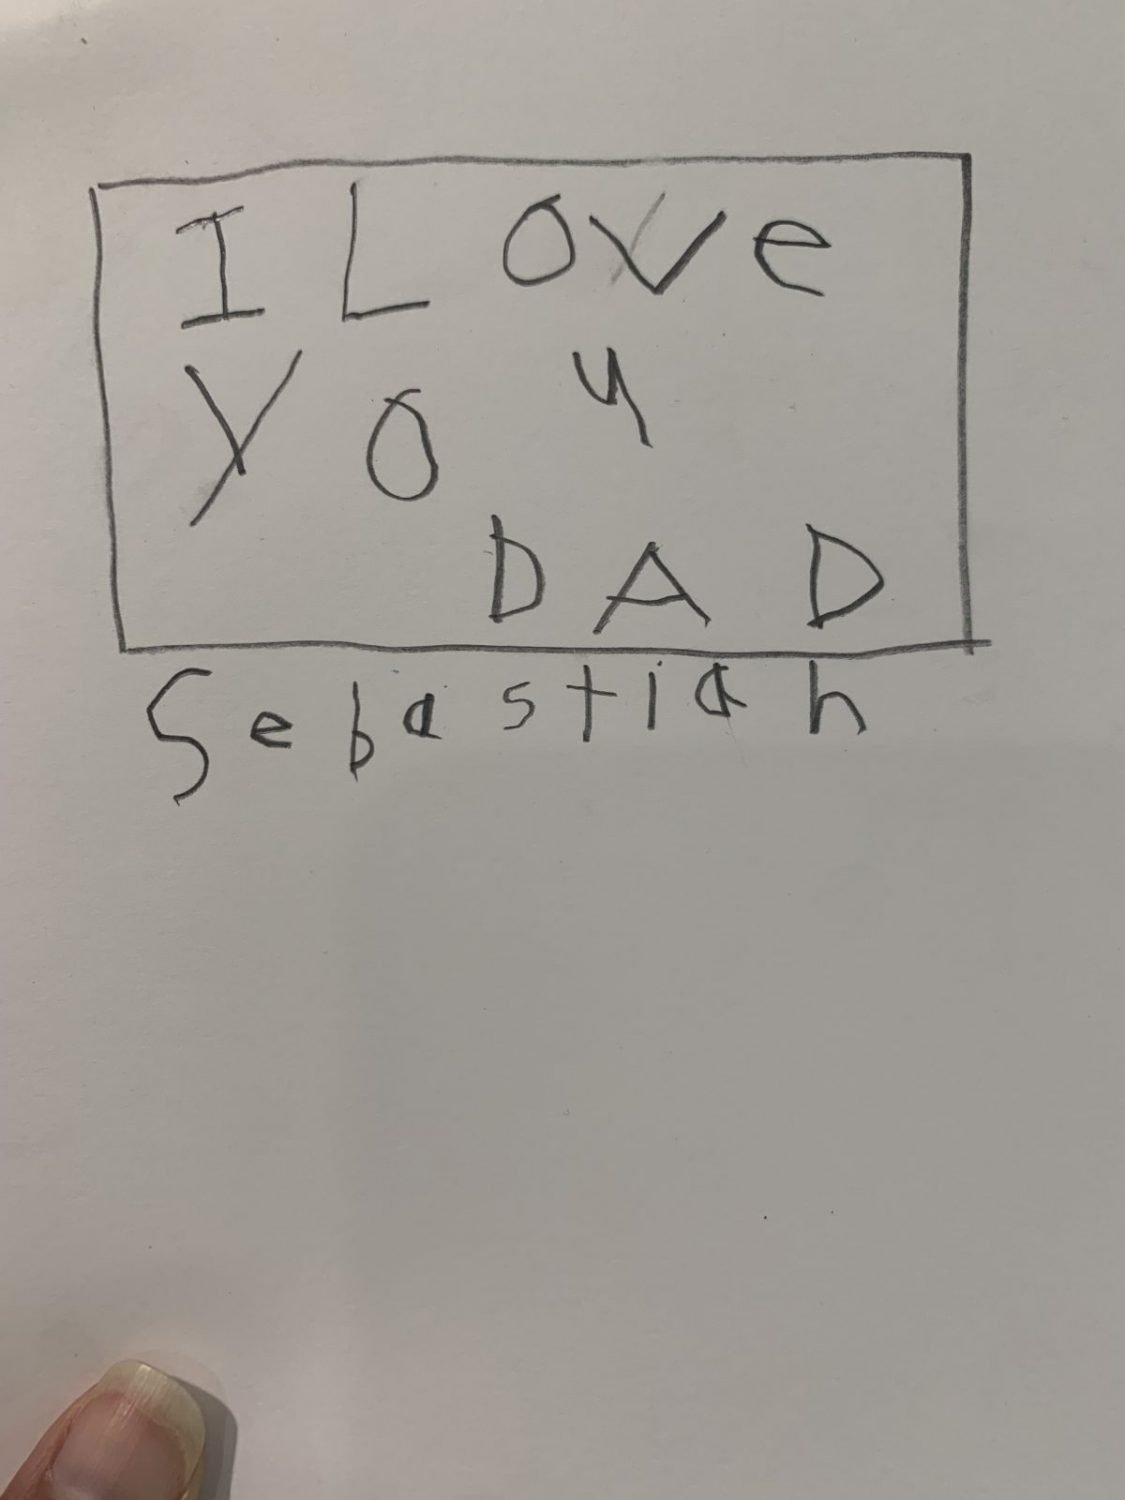 Child's handwriting: I love you dad